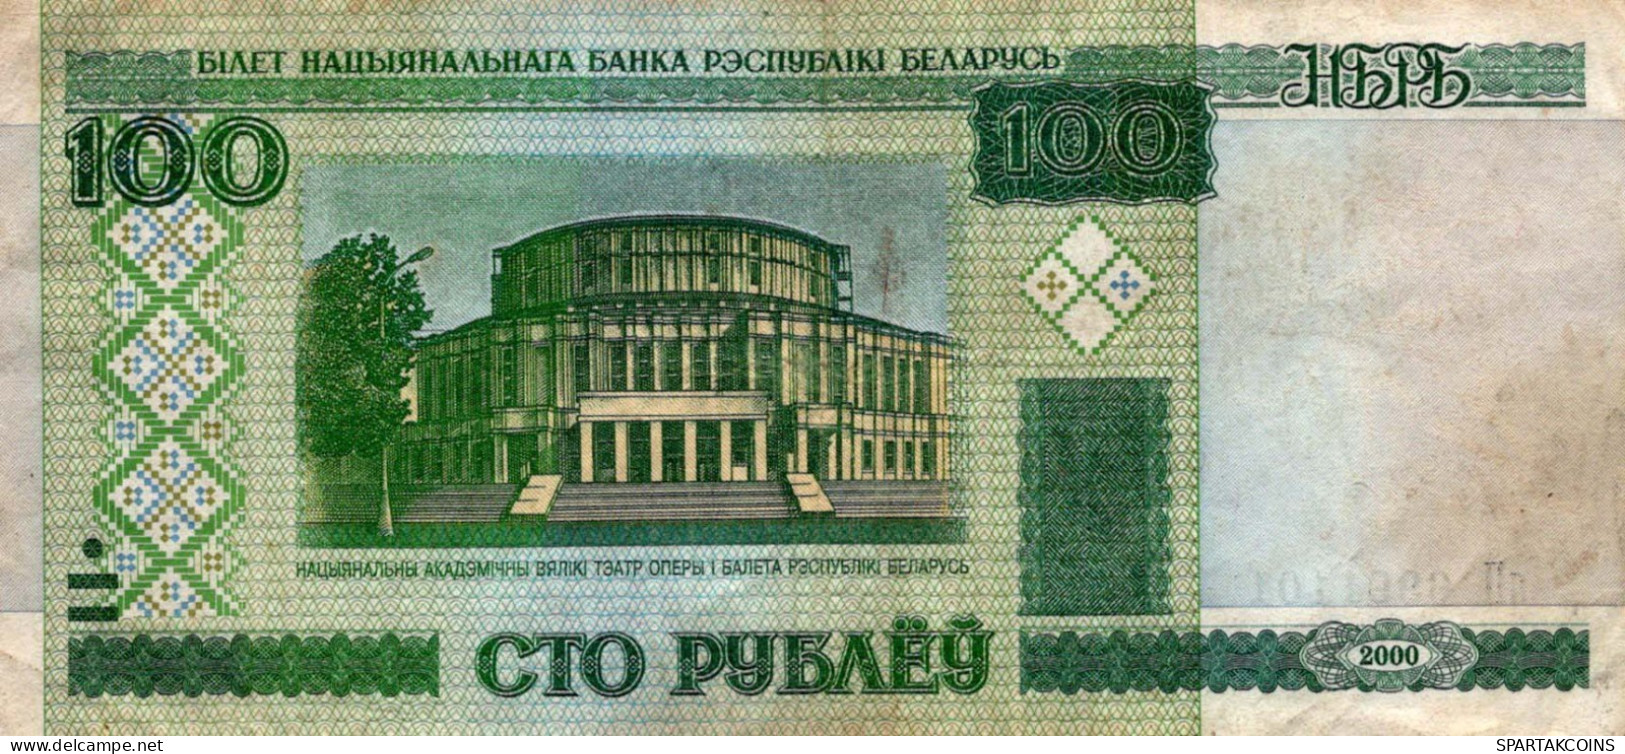 100 RUBLES 2000 BELARUS Papiergeld Banknote #PK613 - [11] Emisiones Locales